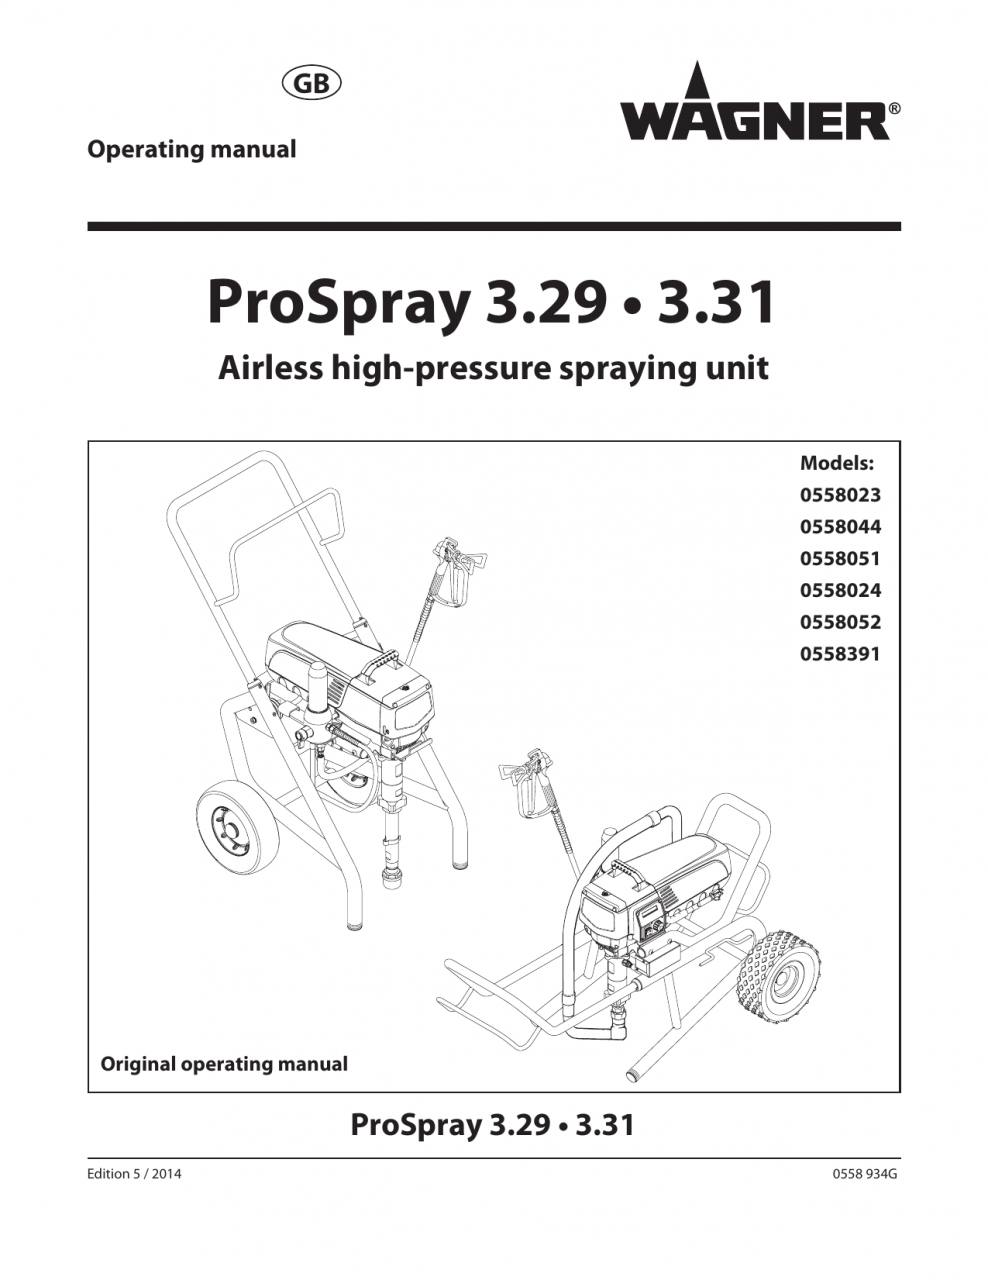 Wagner SprayTech Paint Sprayer 558024 User manual | Manualzz